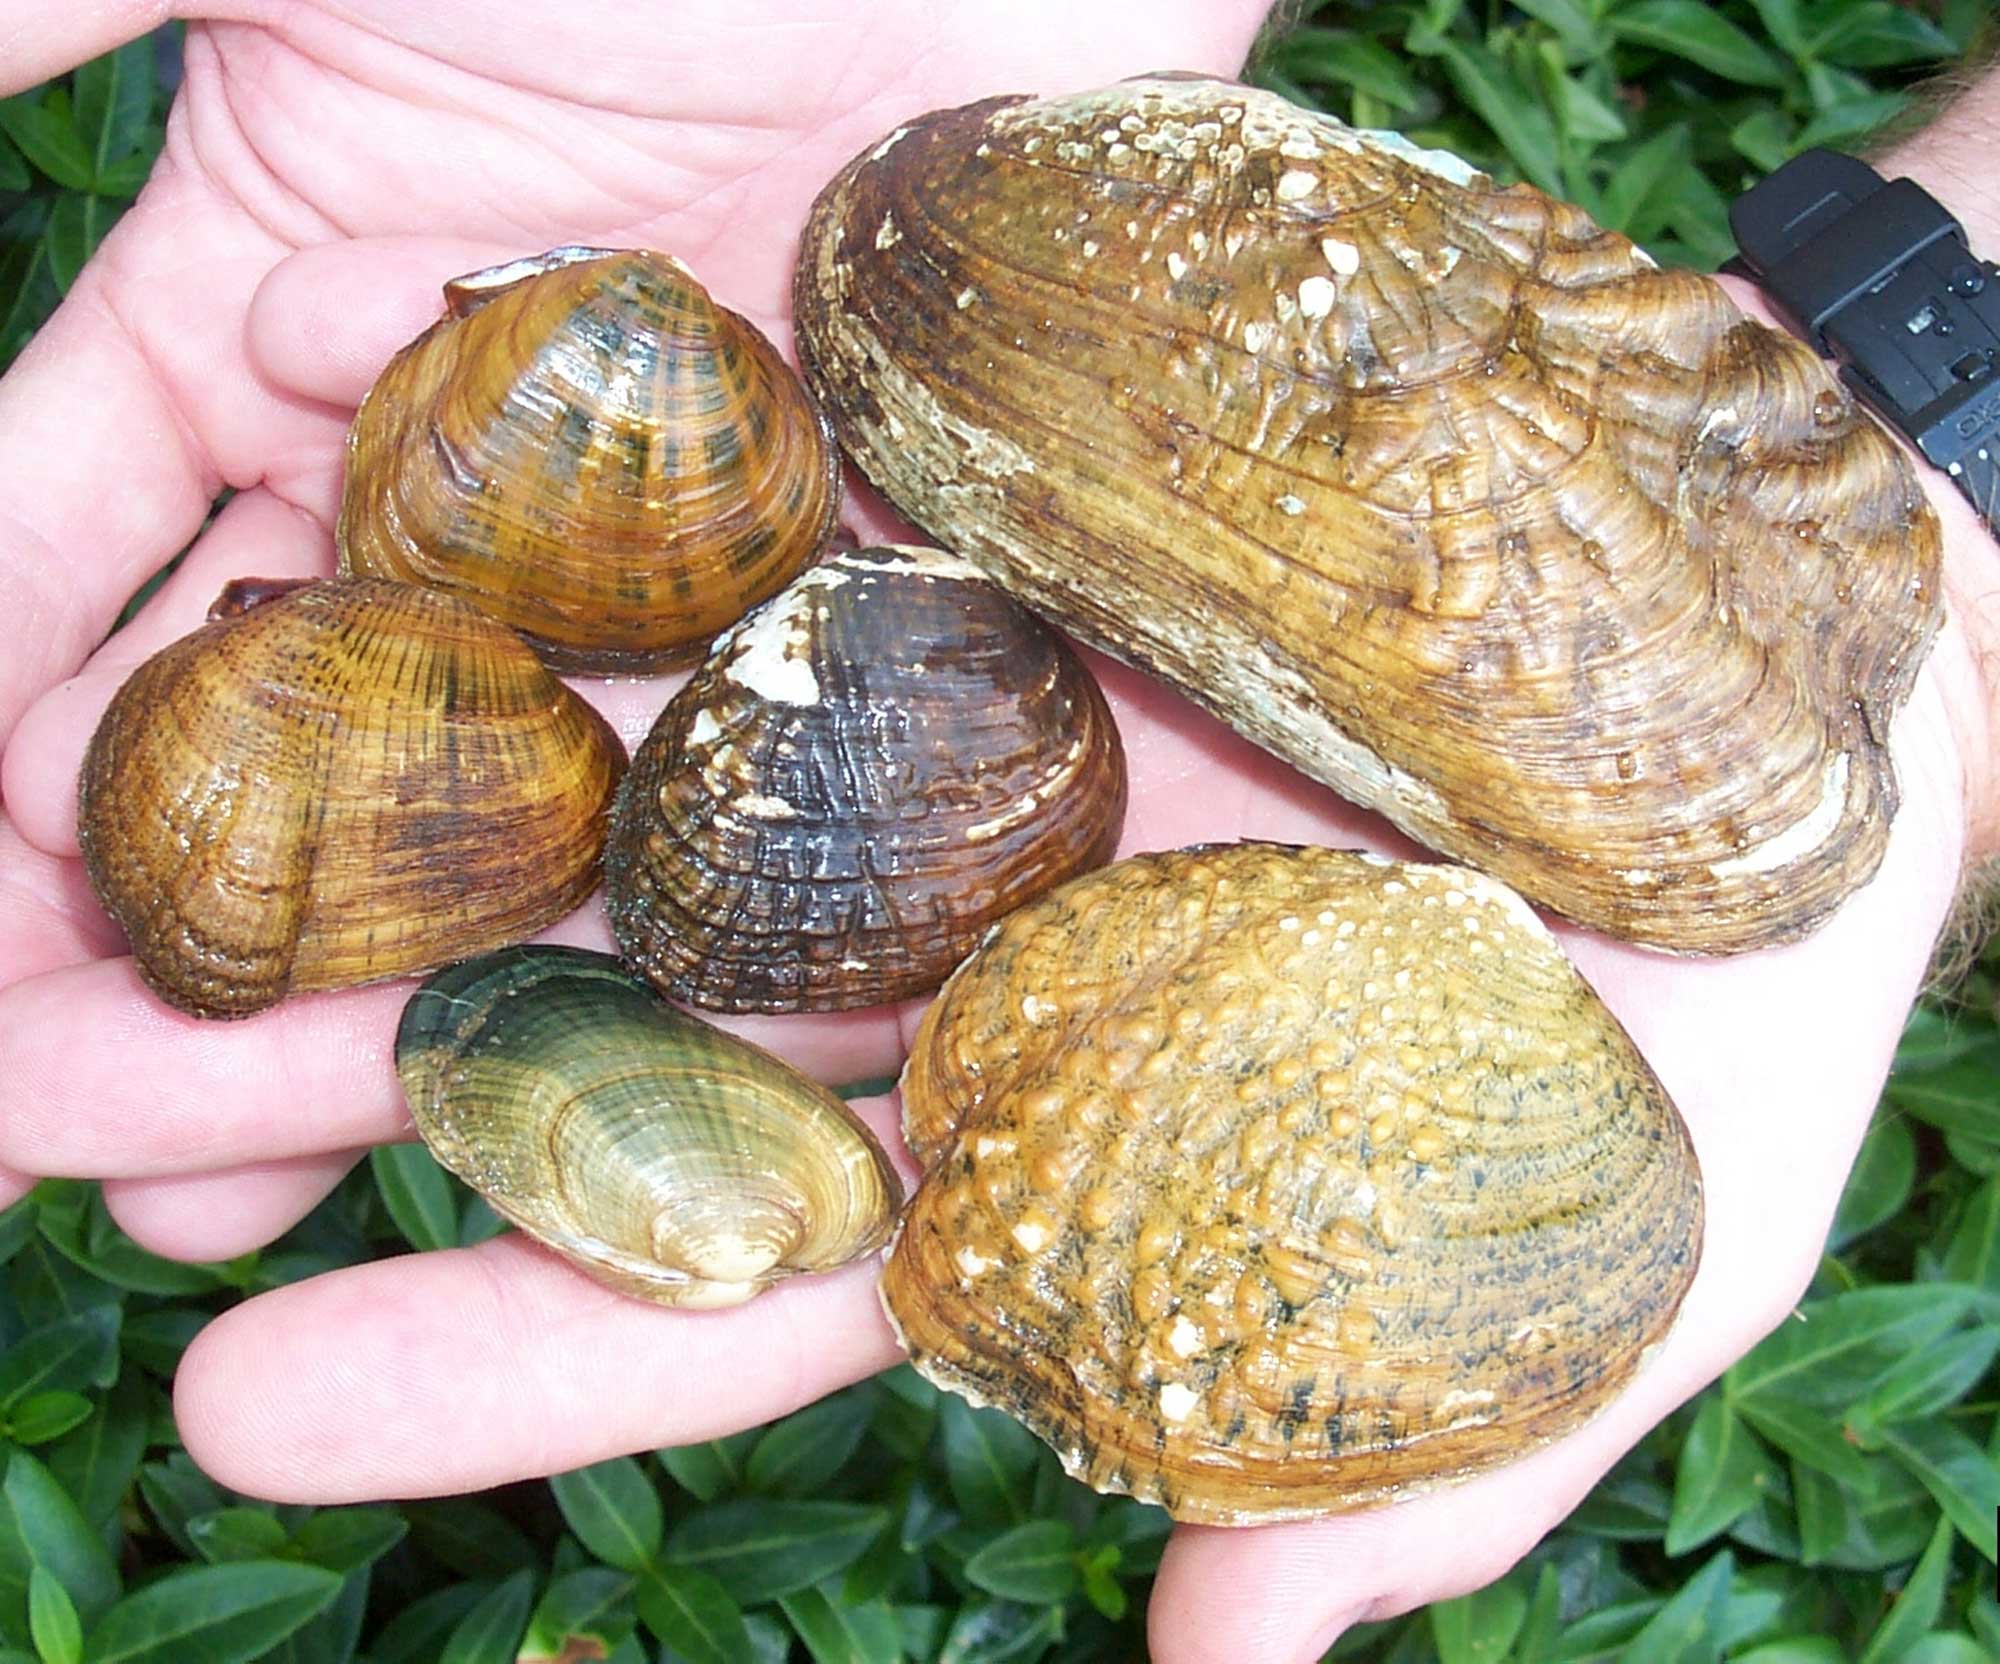 Photograph of modern freshwater mussel shells.